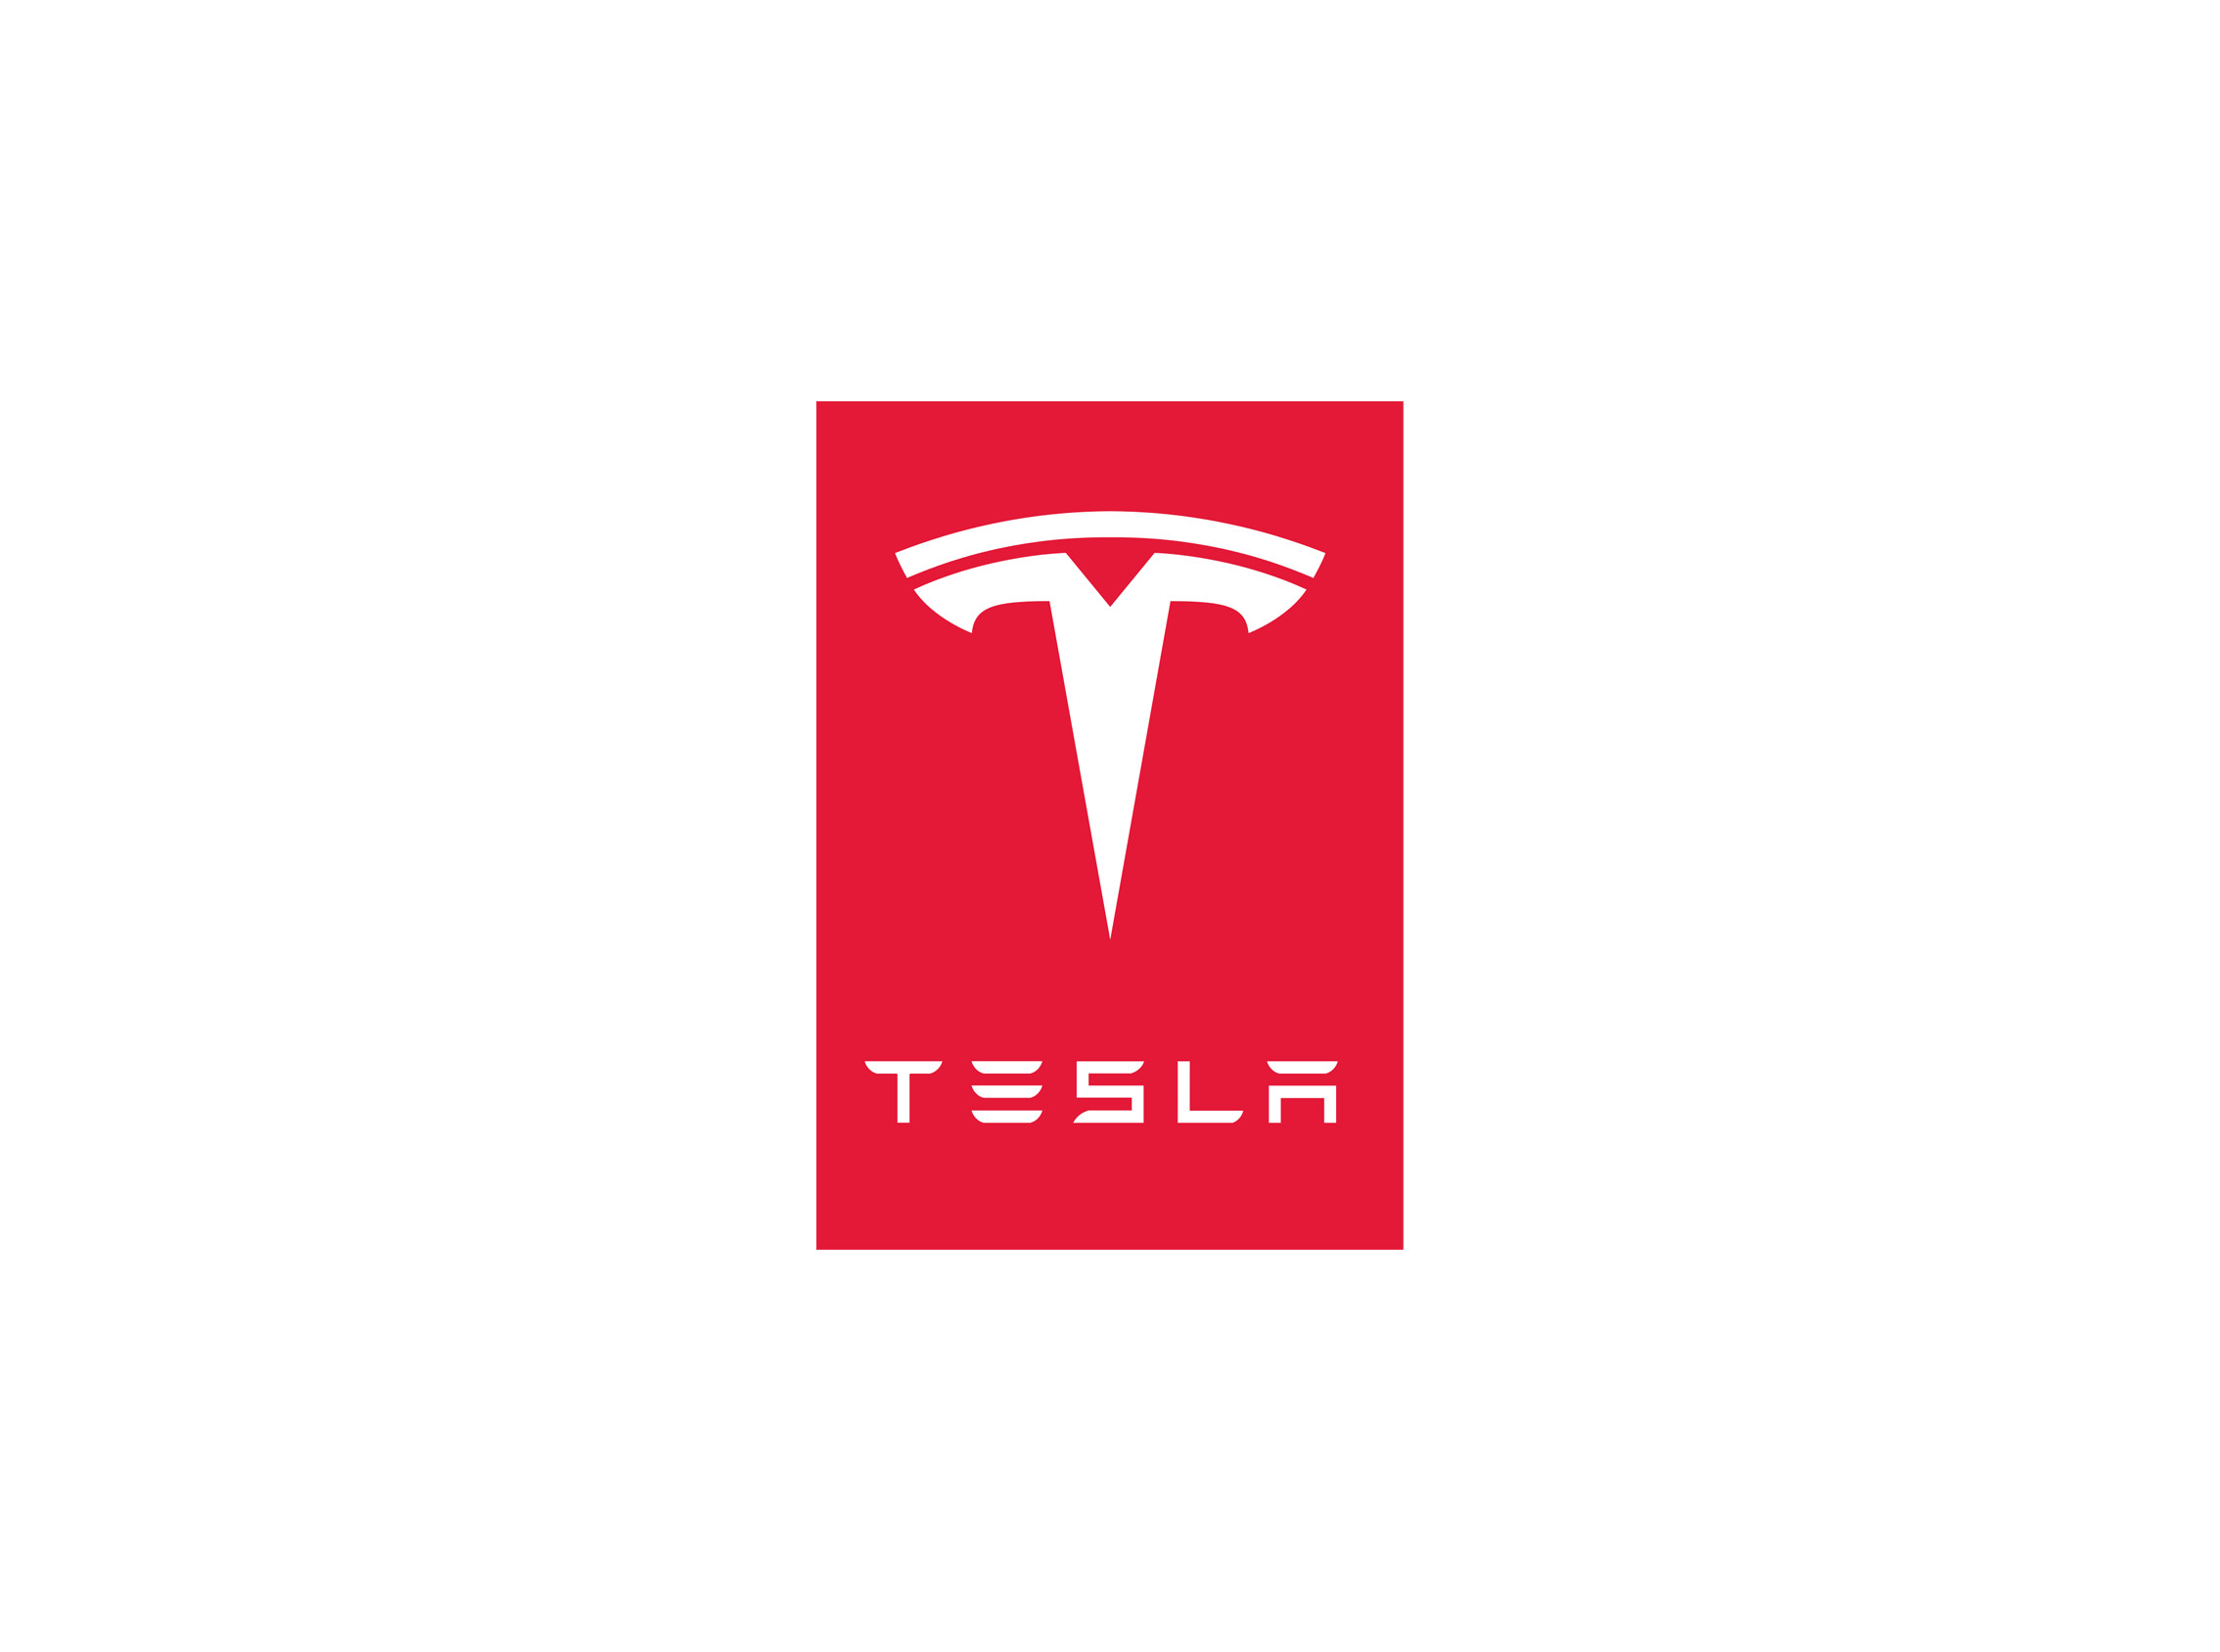 2268x1688 ... Tesla Logo Wallpapers HD Backgrounds WallpapersIn4knet